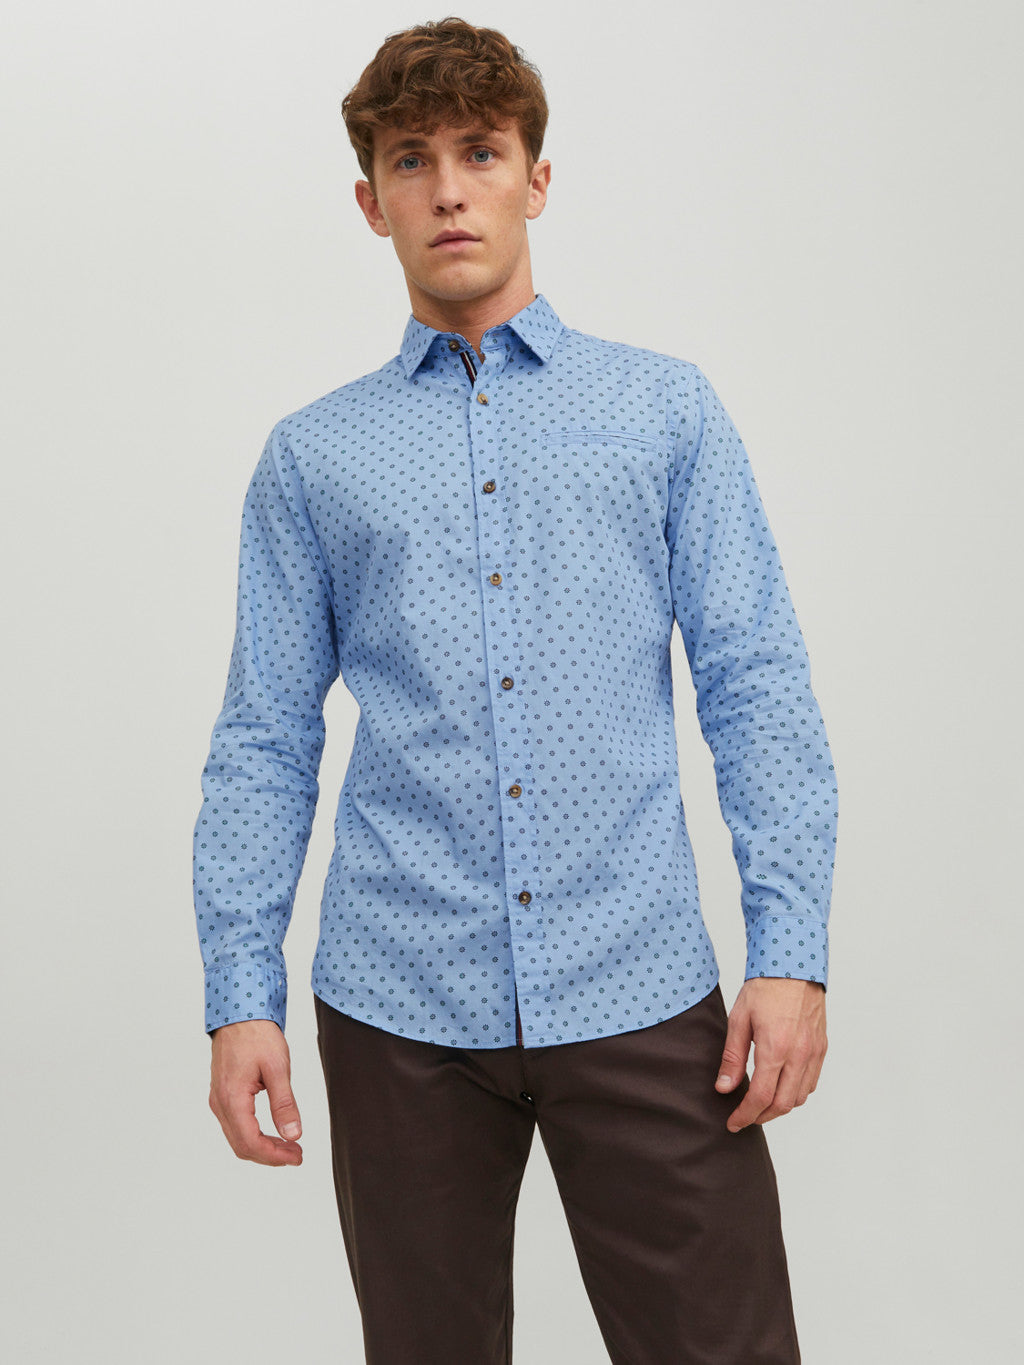 Jack&Jones men's patterned blue shirt